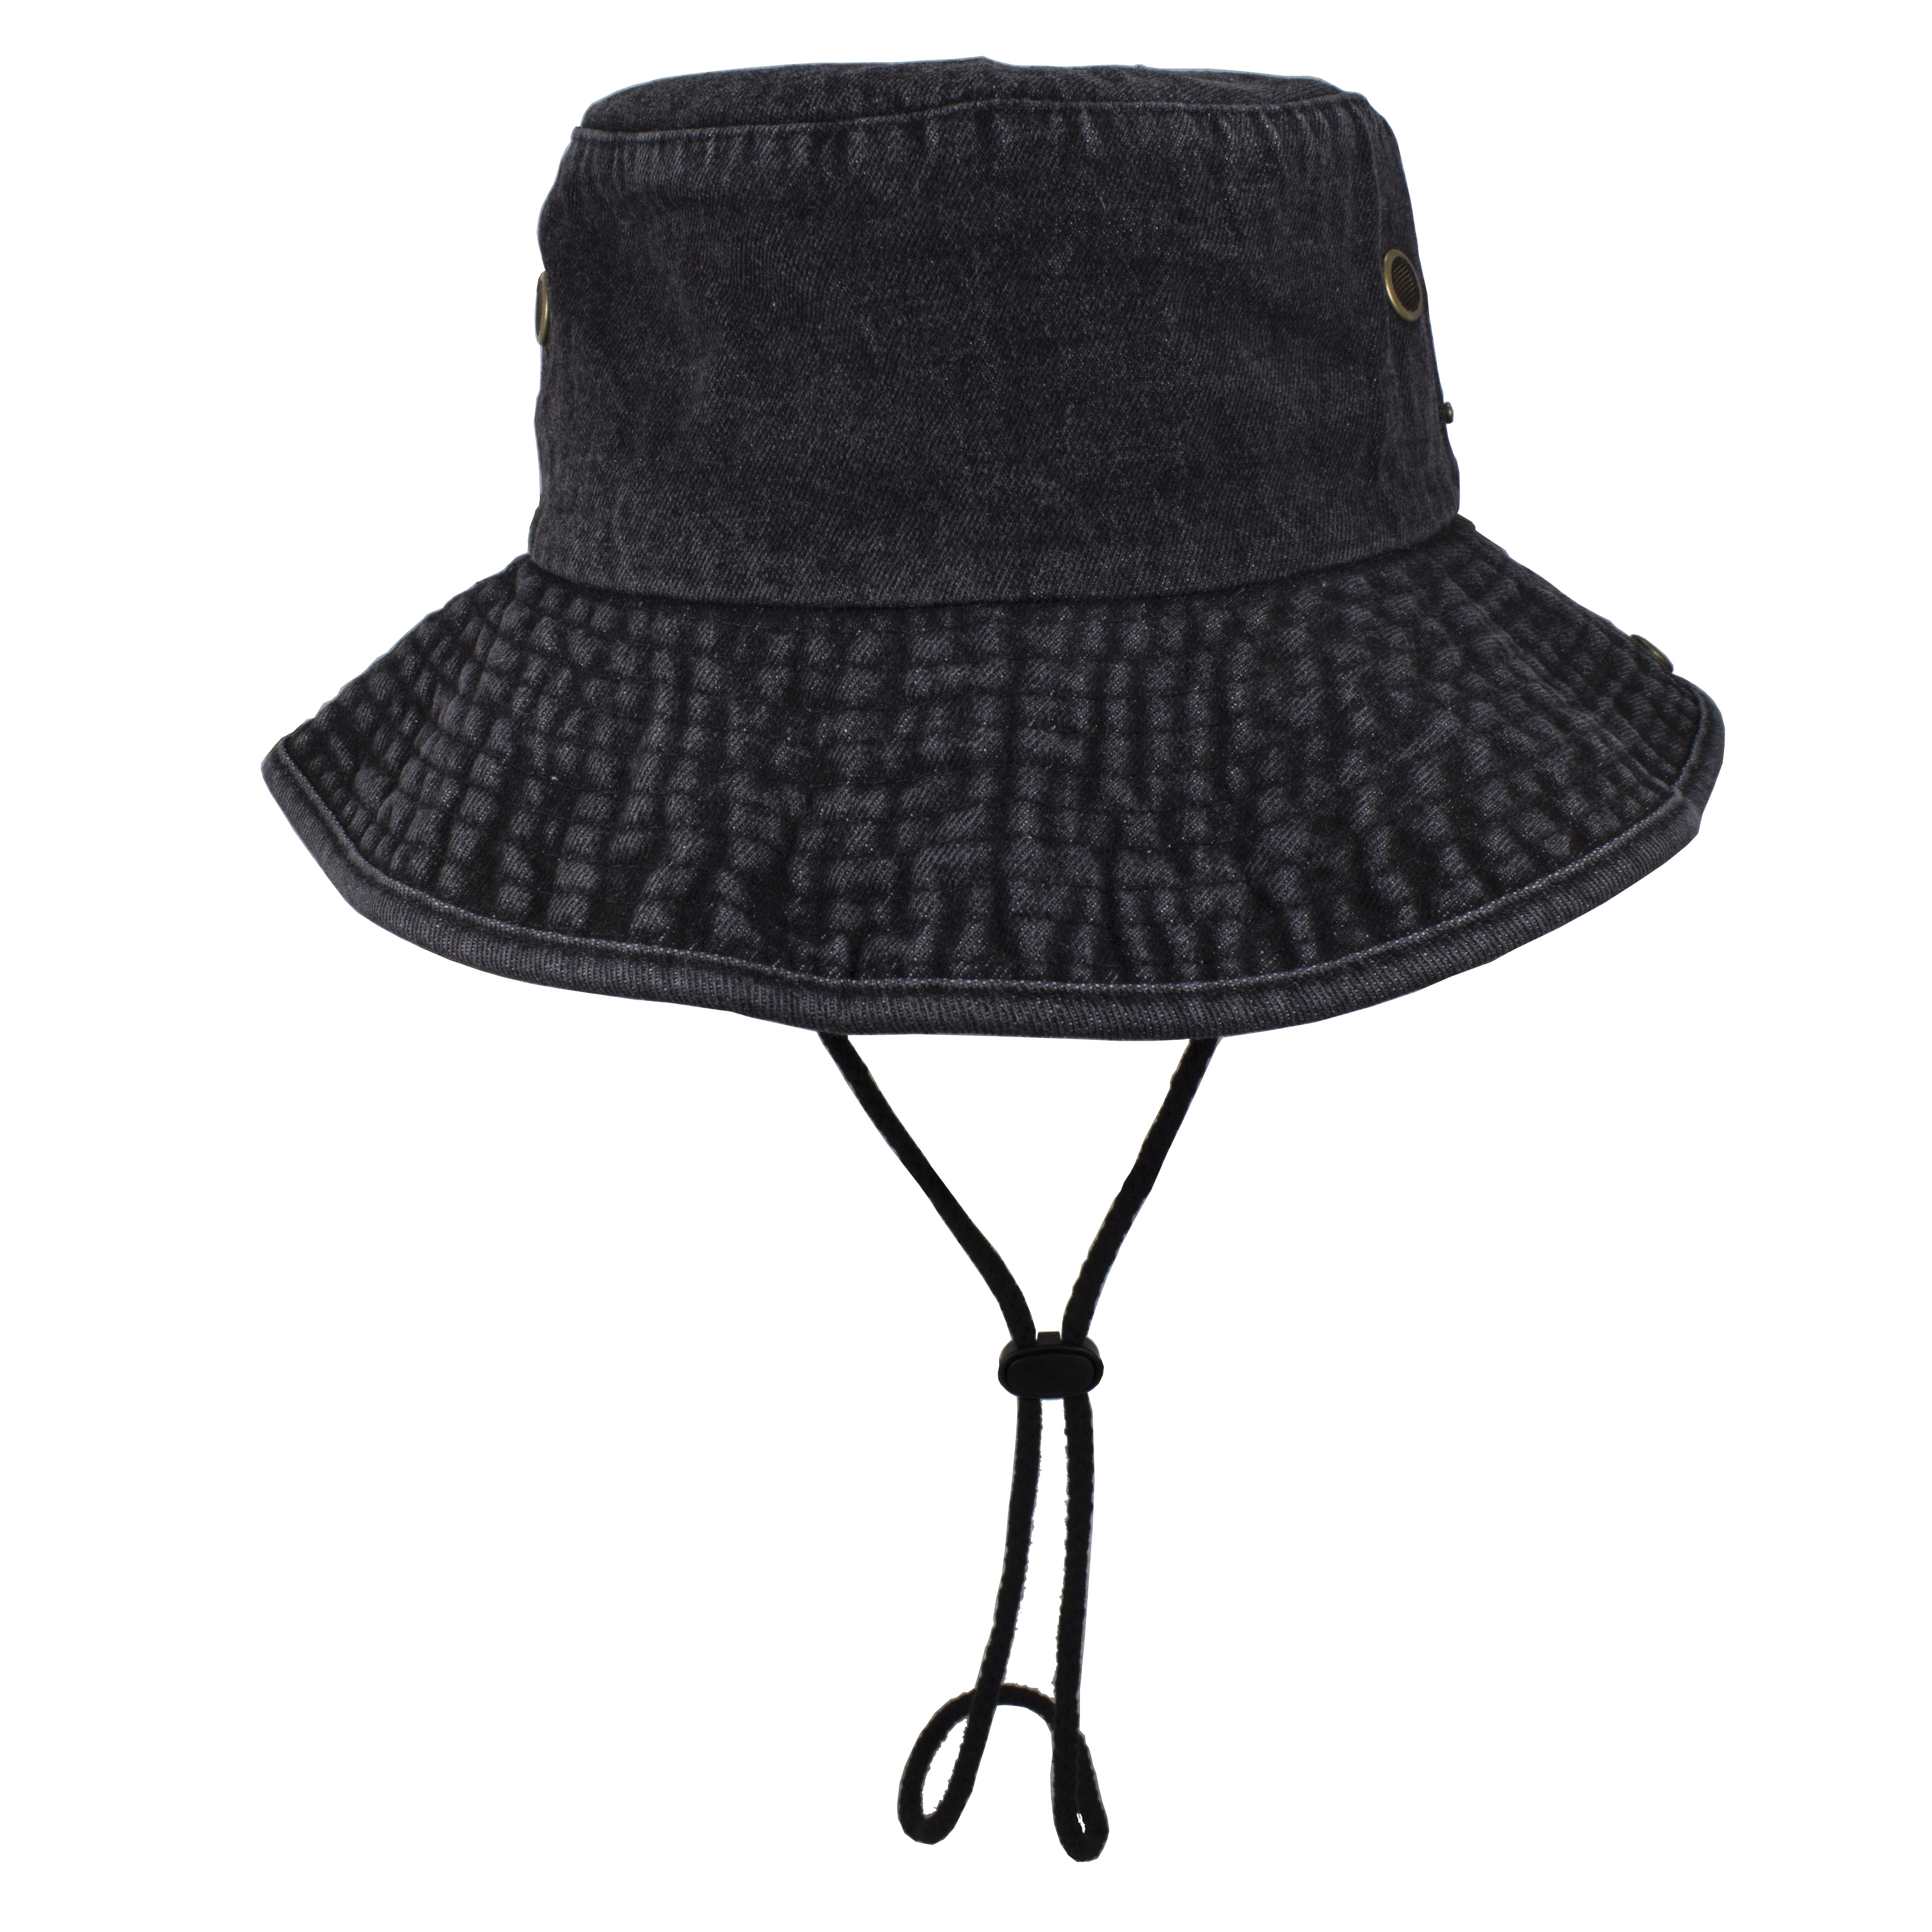 Gelante 100% Cotton Stone-Washed Safari Booney Sun Hats Caps Adult Size